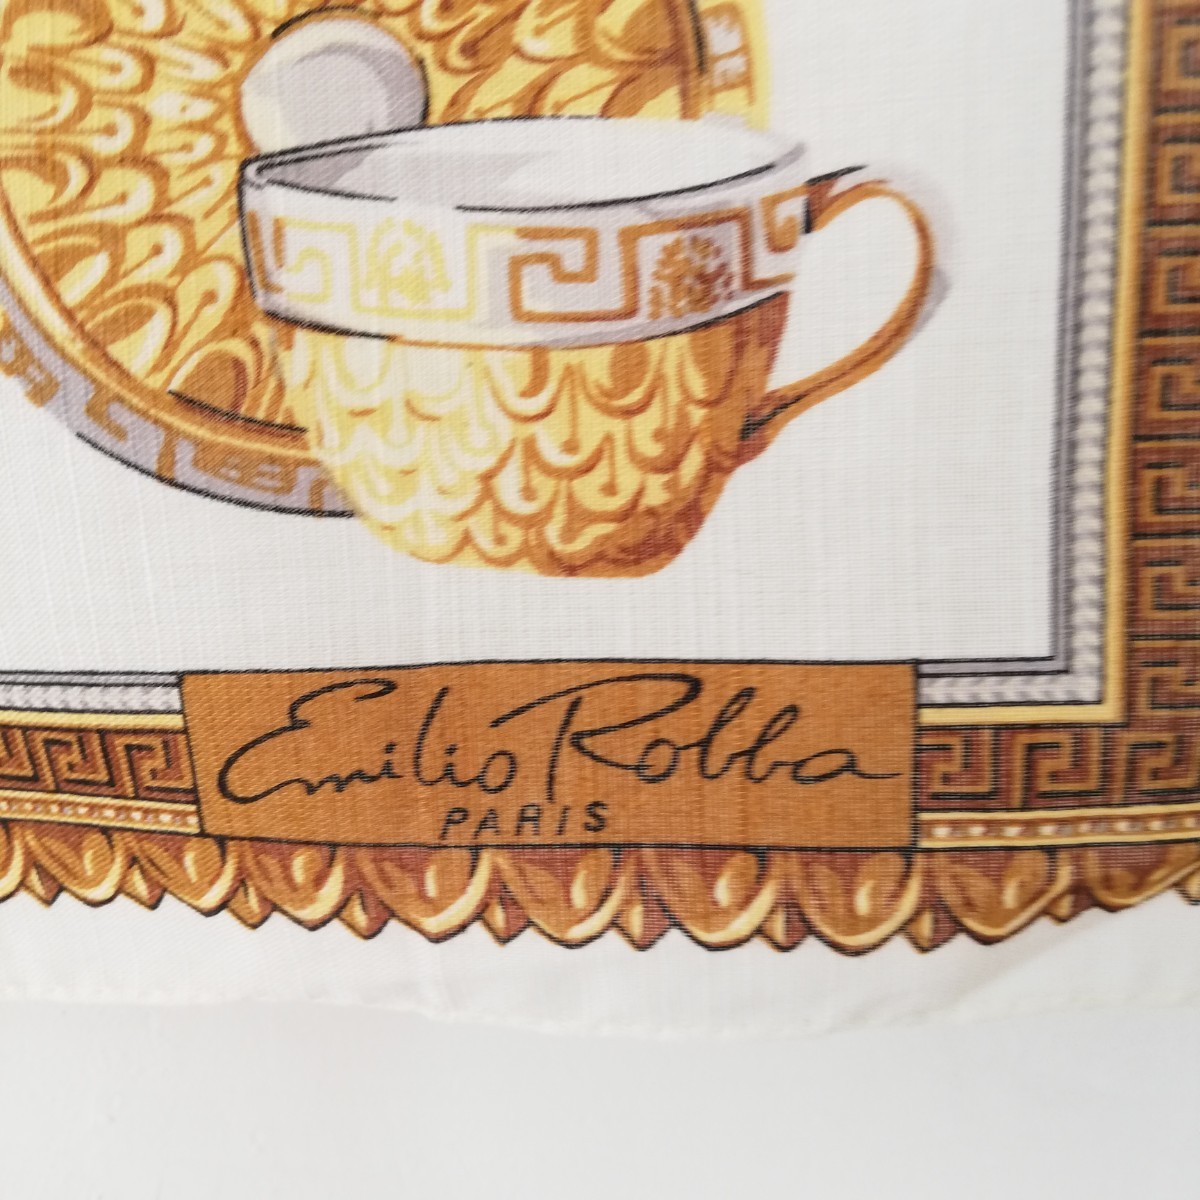 EMILIO ROBBA Paris vintage Handkerchief エミリオ・ロバ 磁器ポット・磁器カップ柄 ハンカチ 46cm×47cm 未使用品 綿100% ビンテージ _画像6